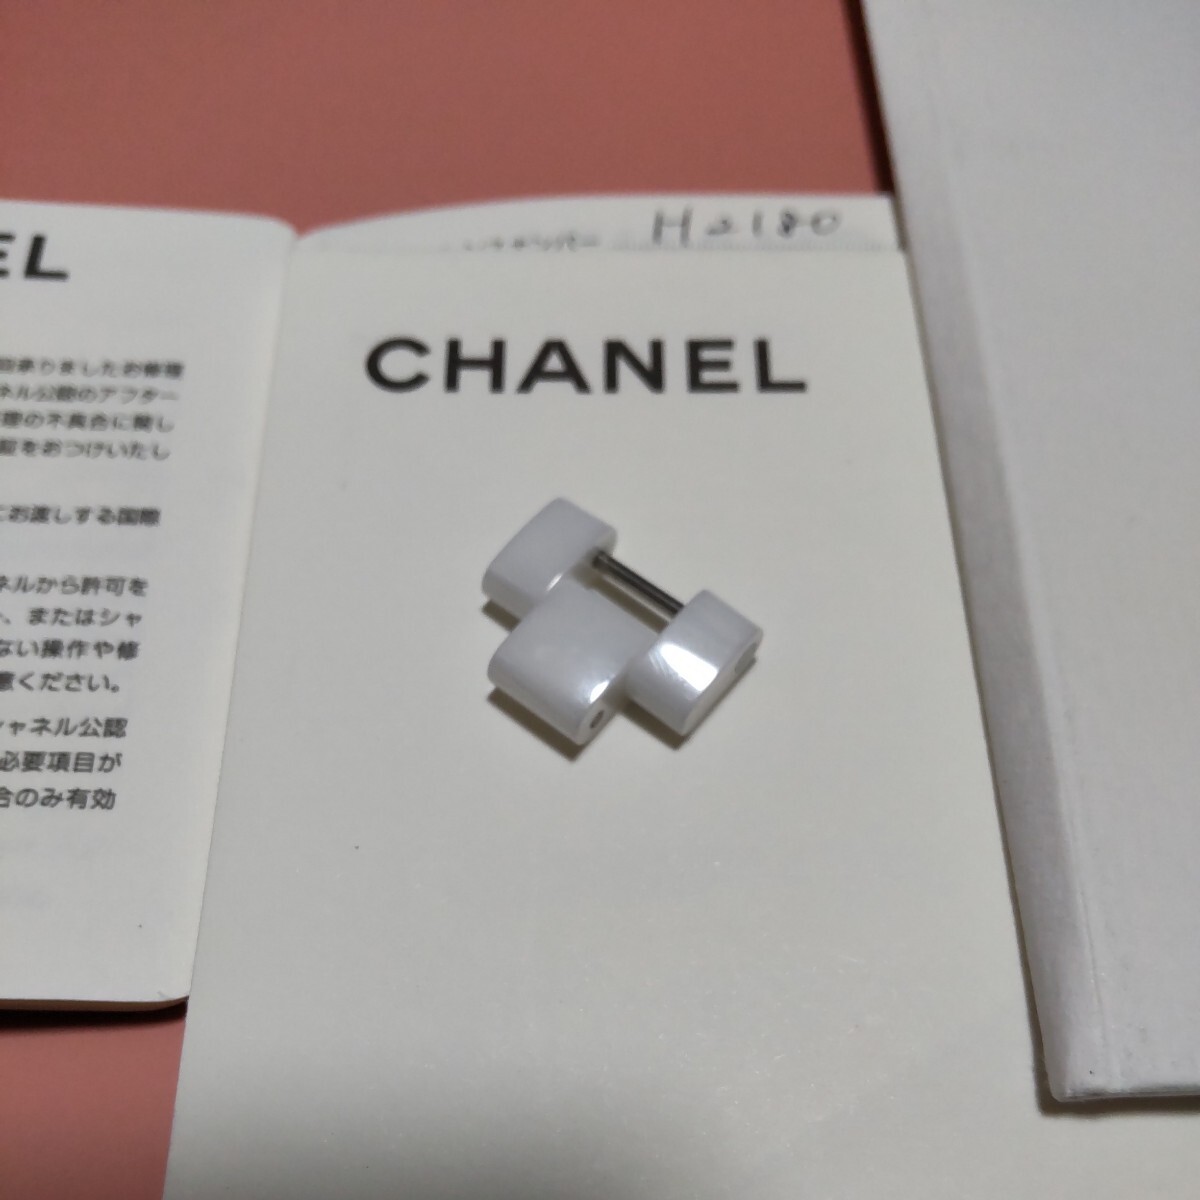 CHANEL J12 Chanel regular men's adjustment piece ceramic white belt 1 koma WH original length 13.5mm width 17mm H2180 accessory unused 010